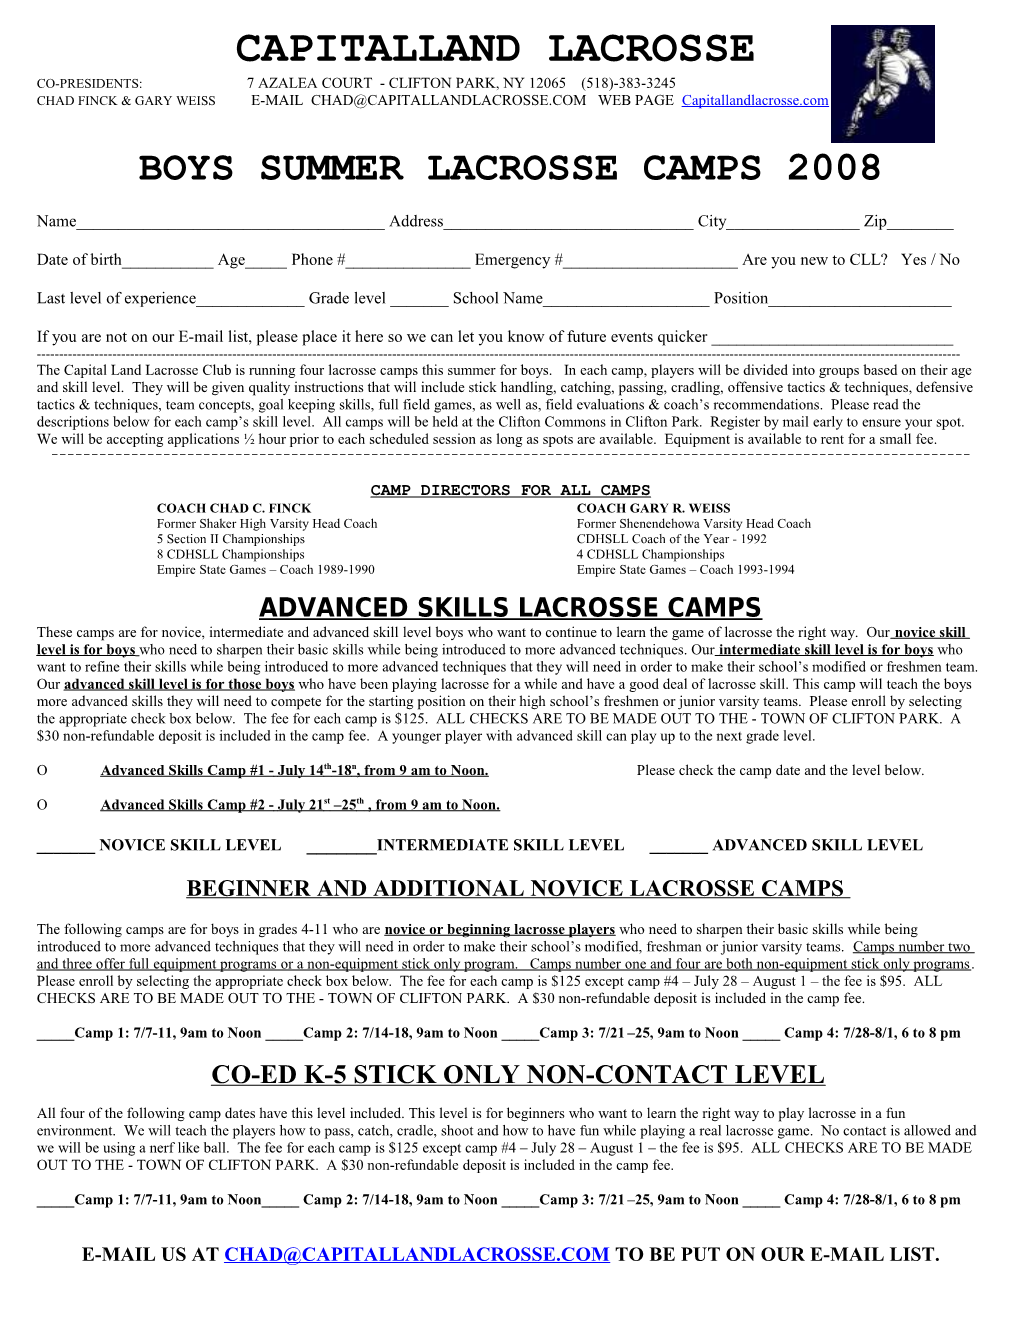 Boys Summer Lacrosse Camps 2008